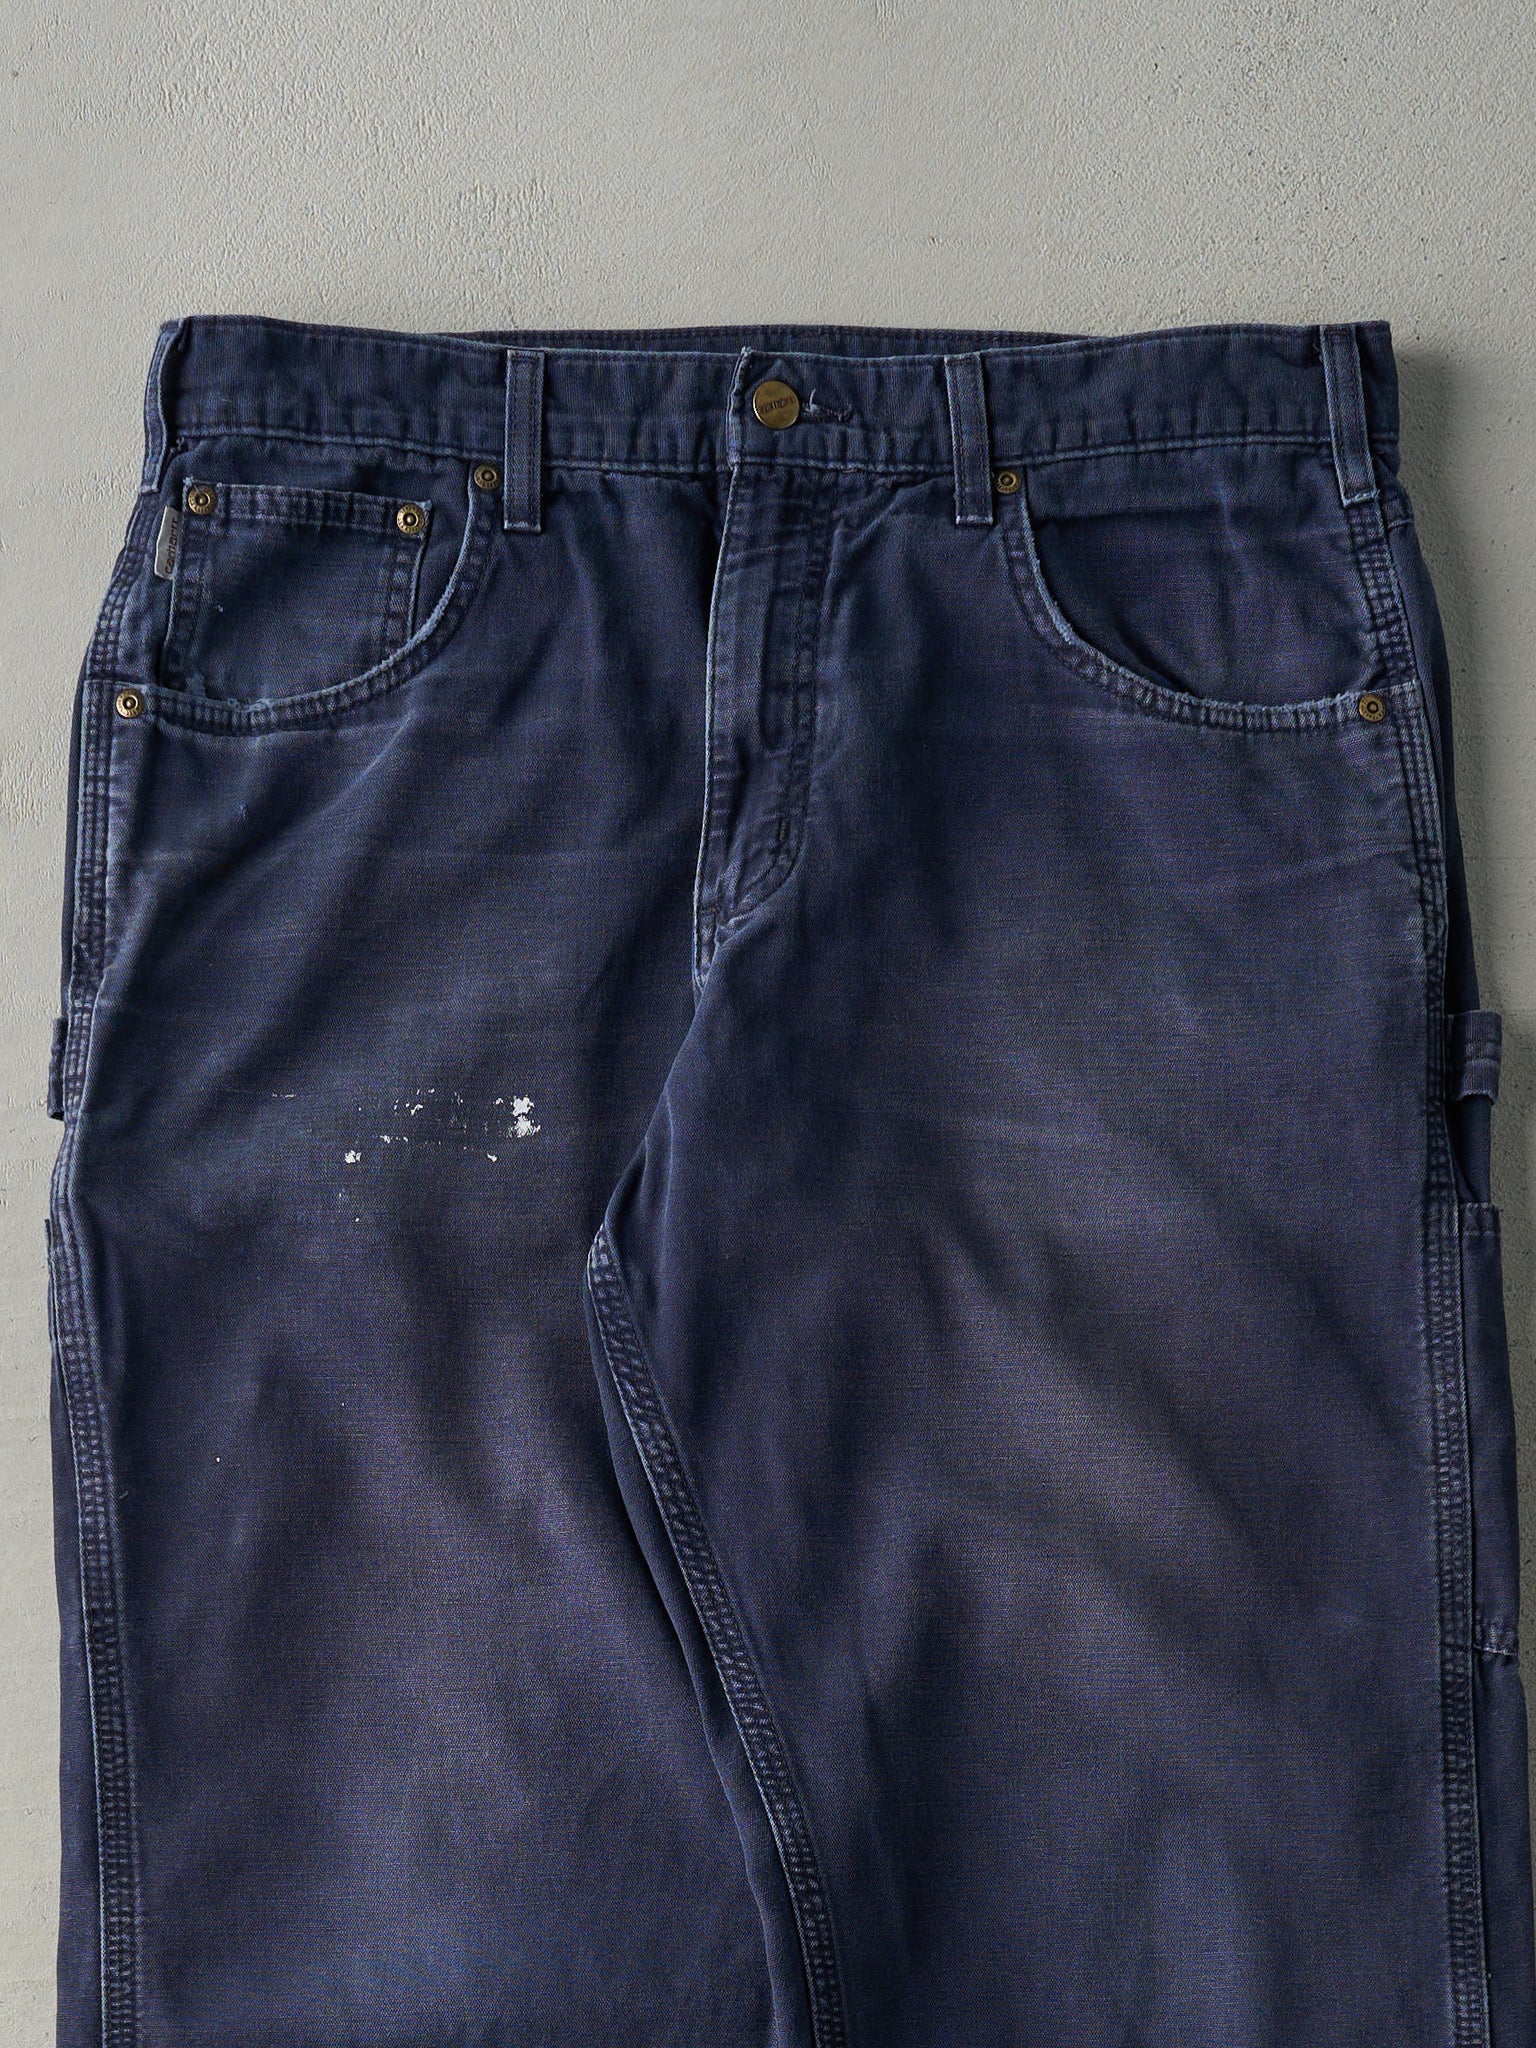 Vintage Y2K Navy Blue Carhartt Loose Fit Light Weight Carpenter Pants (34x29)